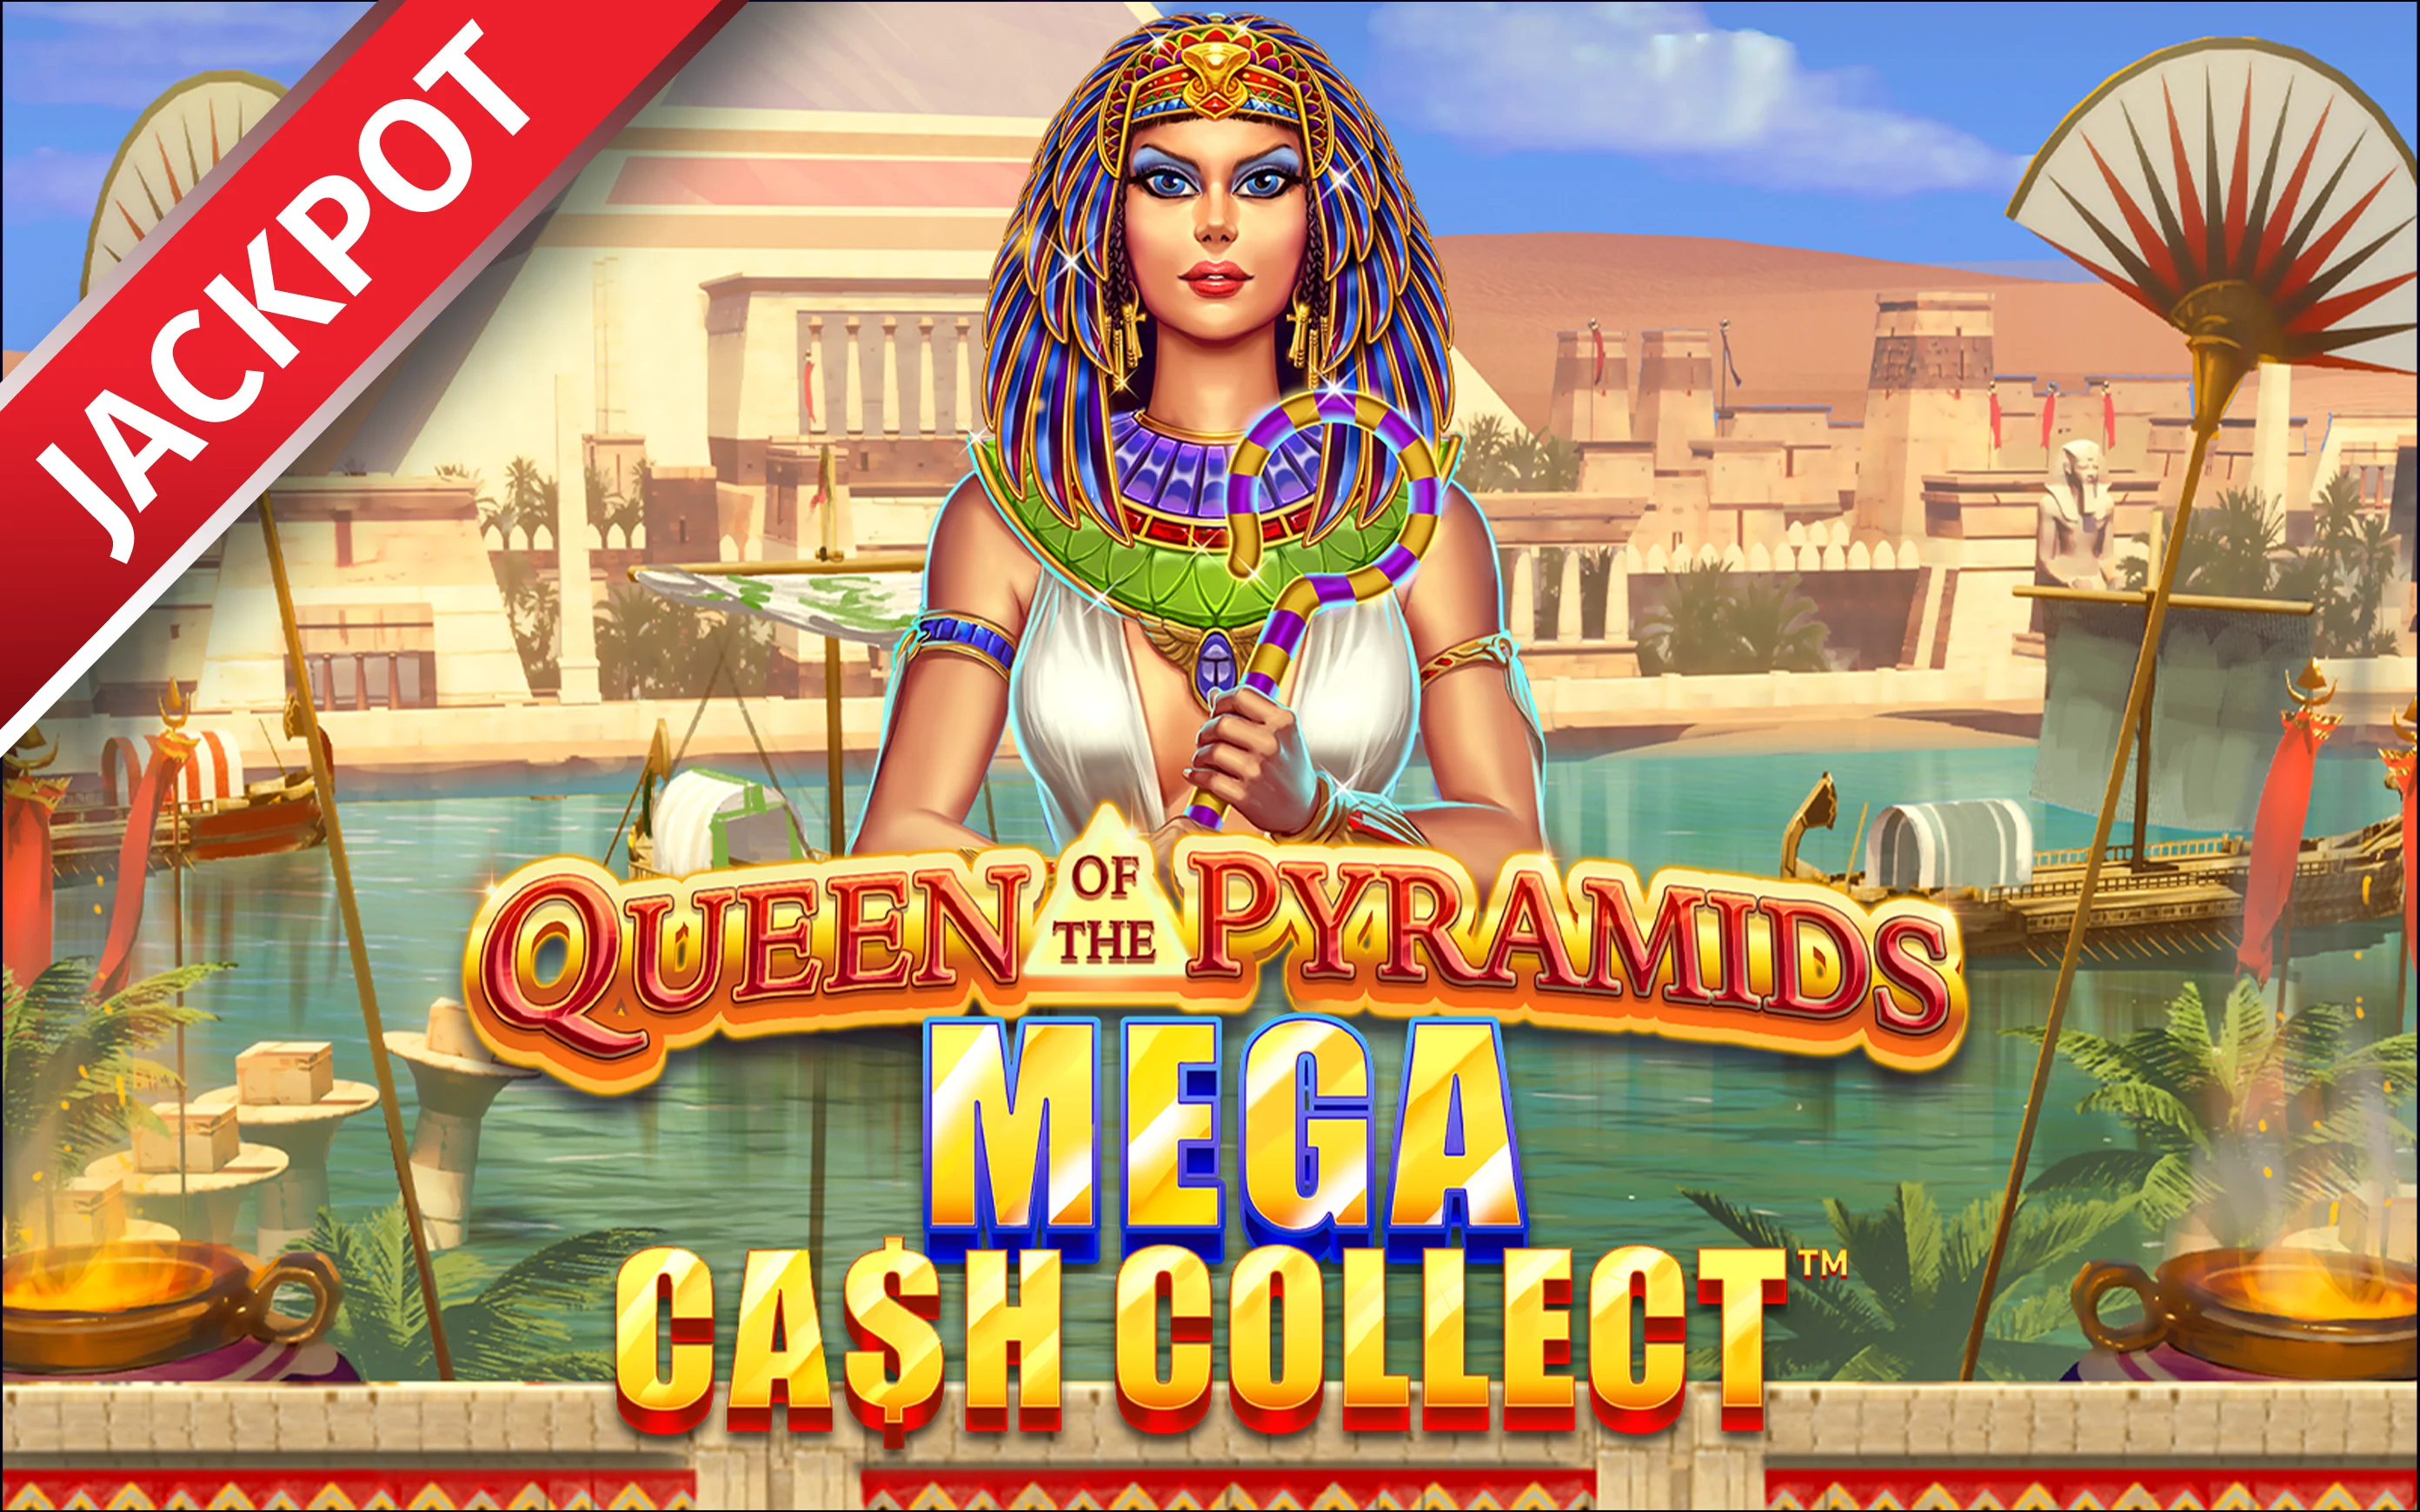 Jogue Queen of the Pyramids: Mega Cash Collect™ no casino online Starcasino.be 